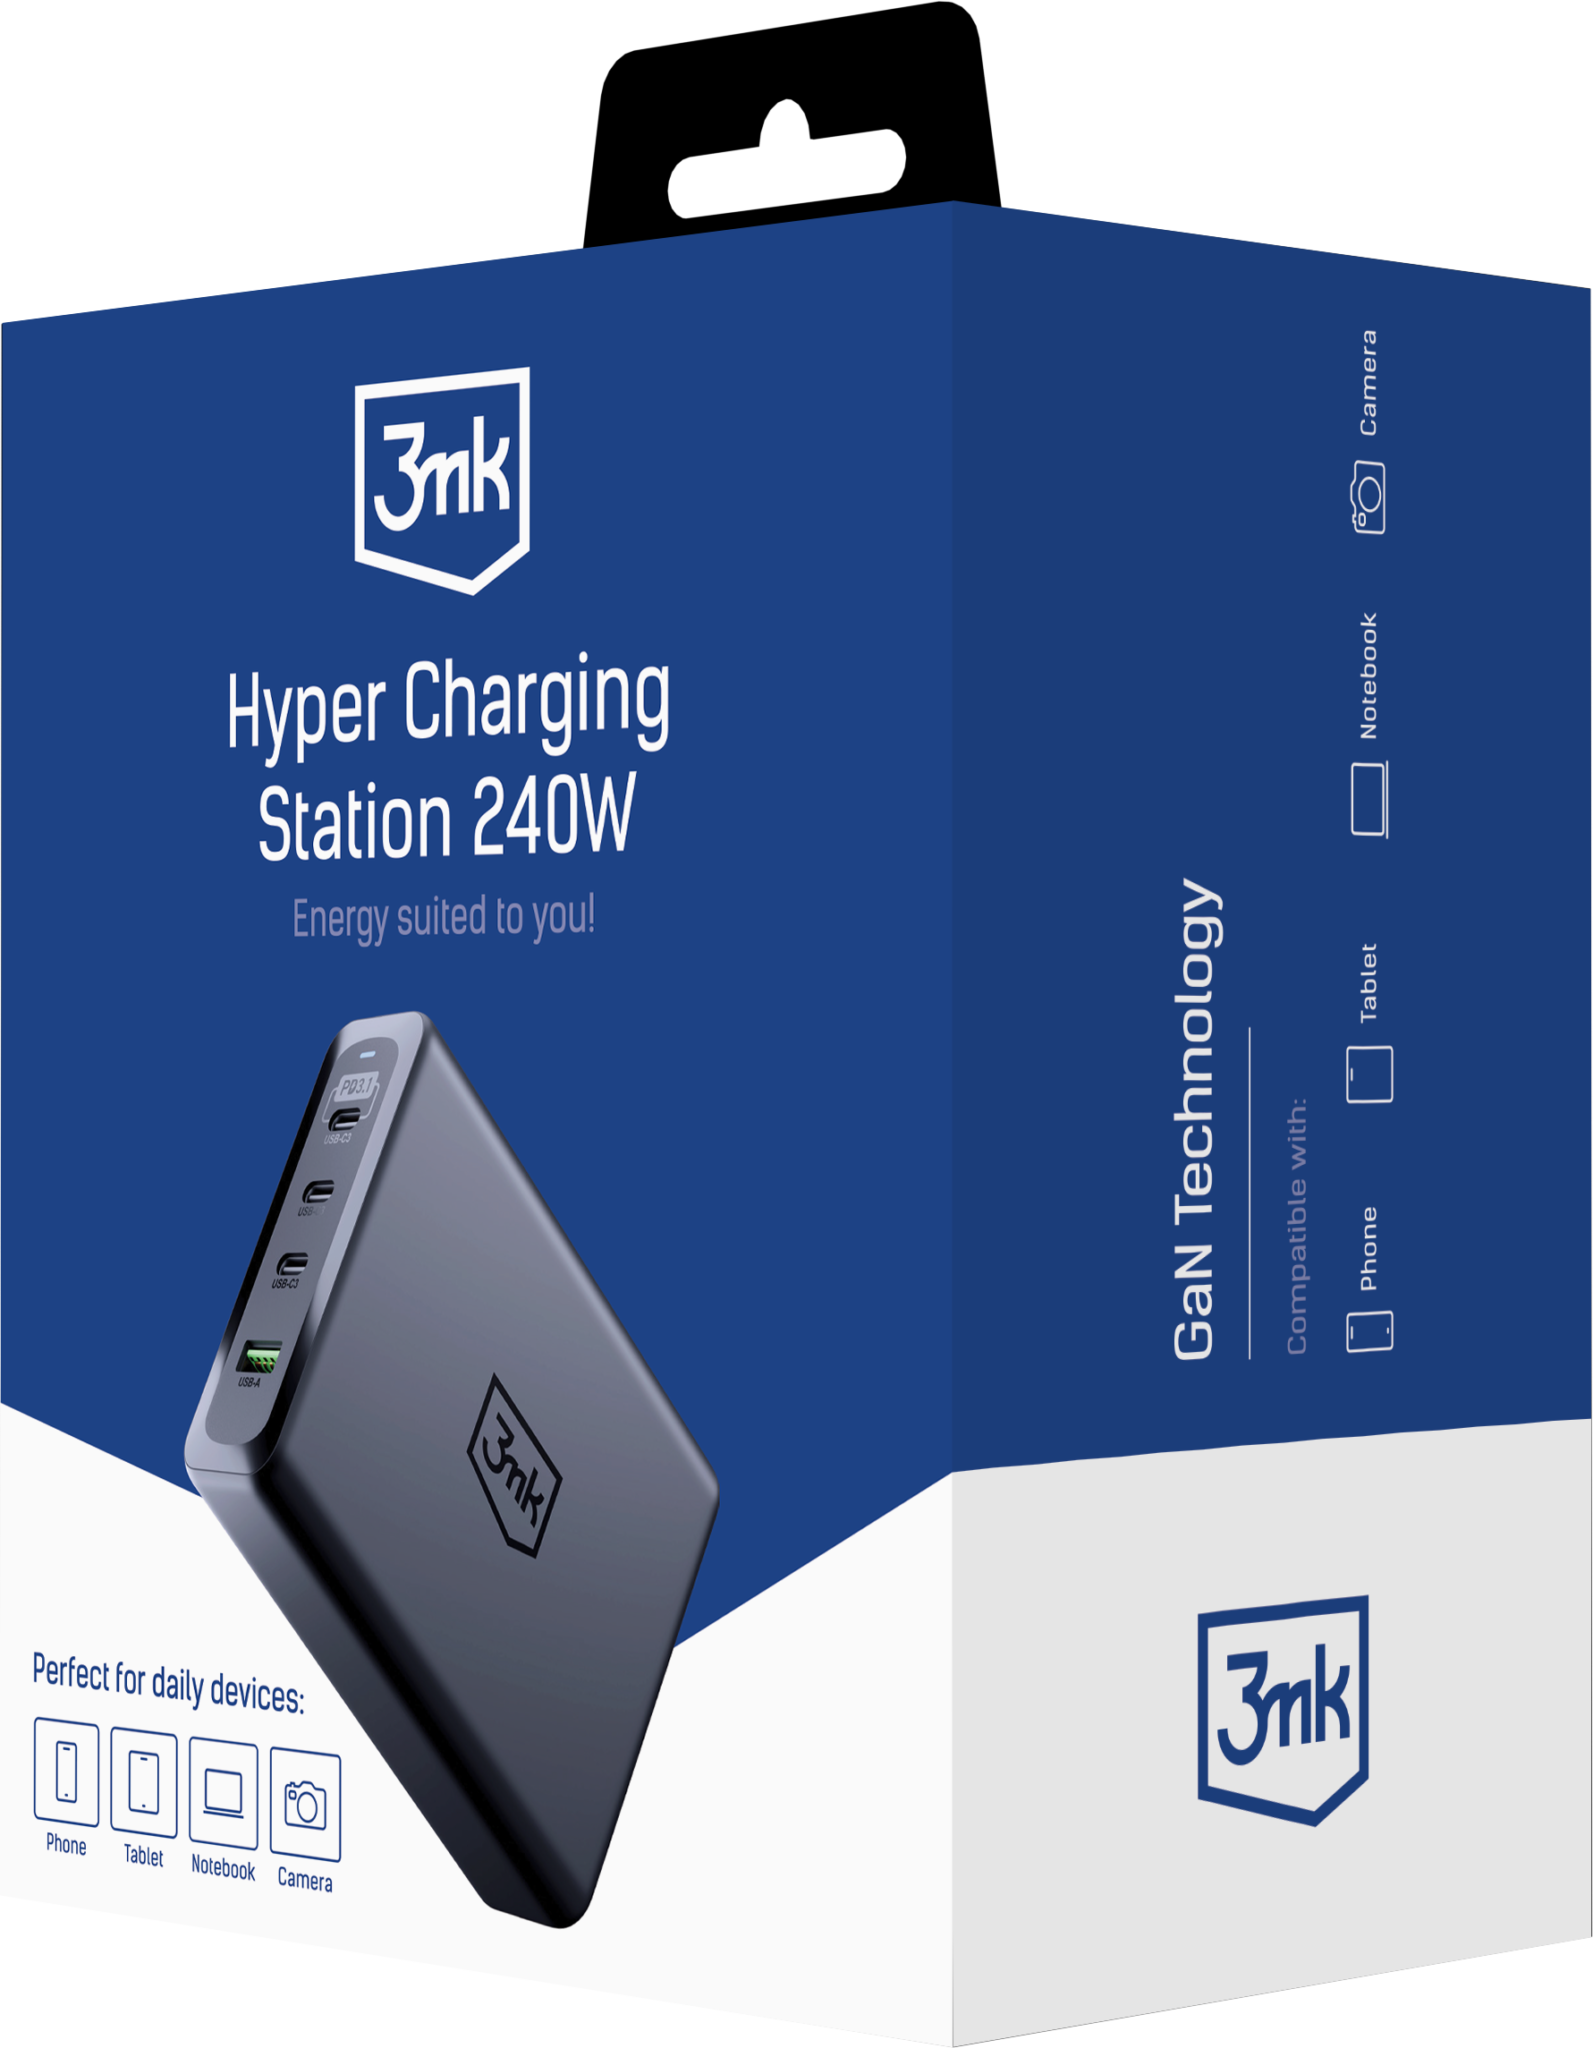 3mk-hyper-charging-station-240w_-packshot-1593x2048